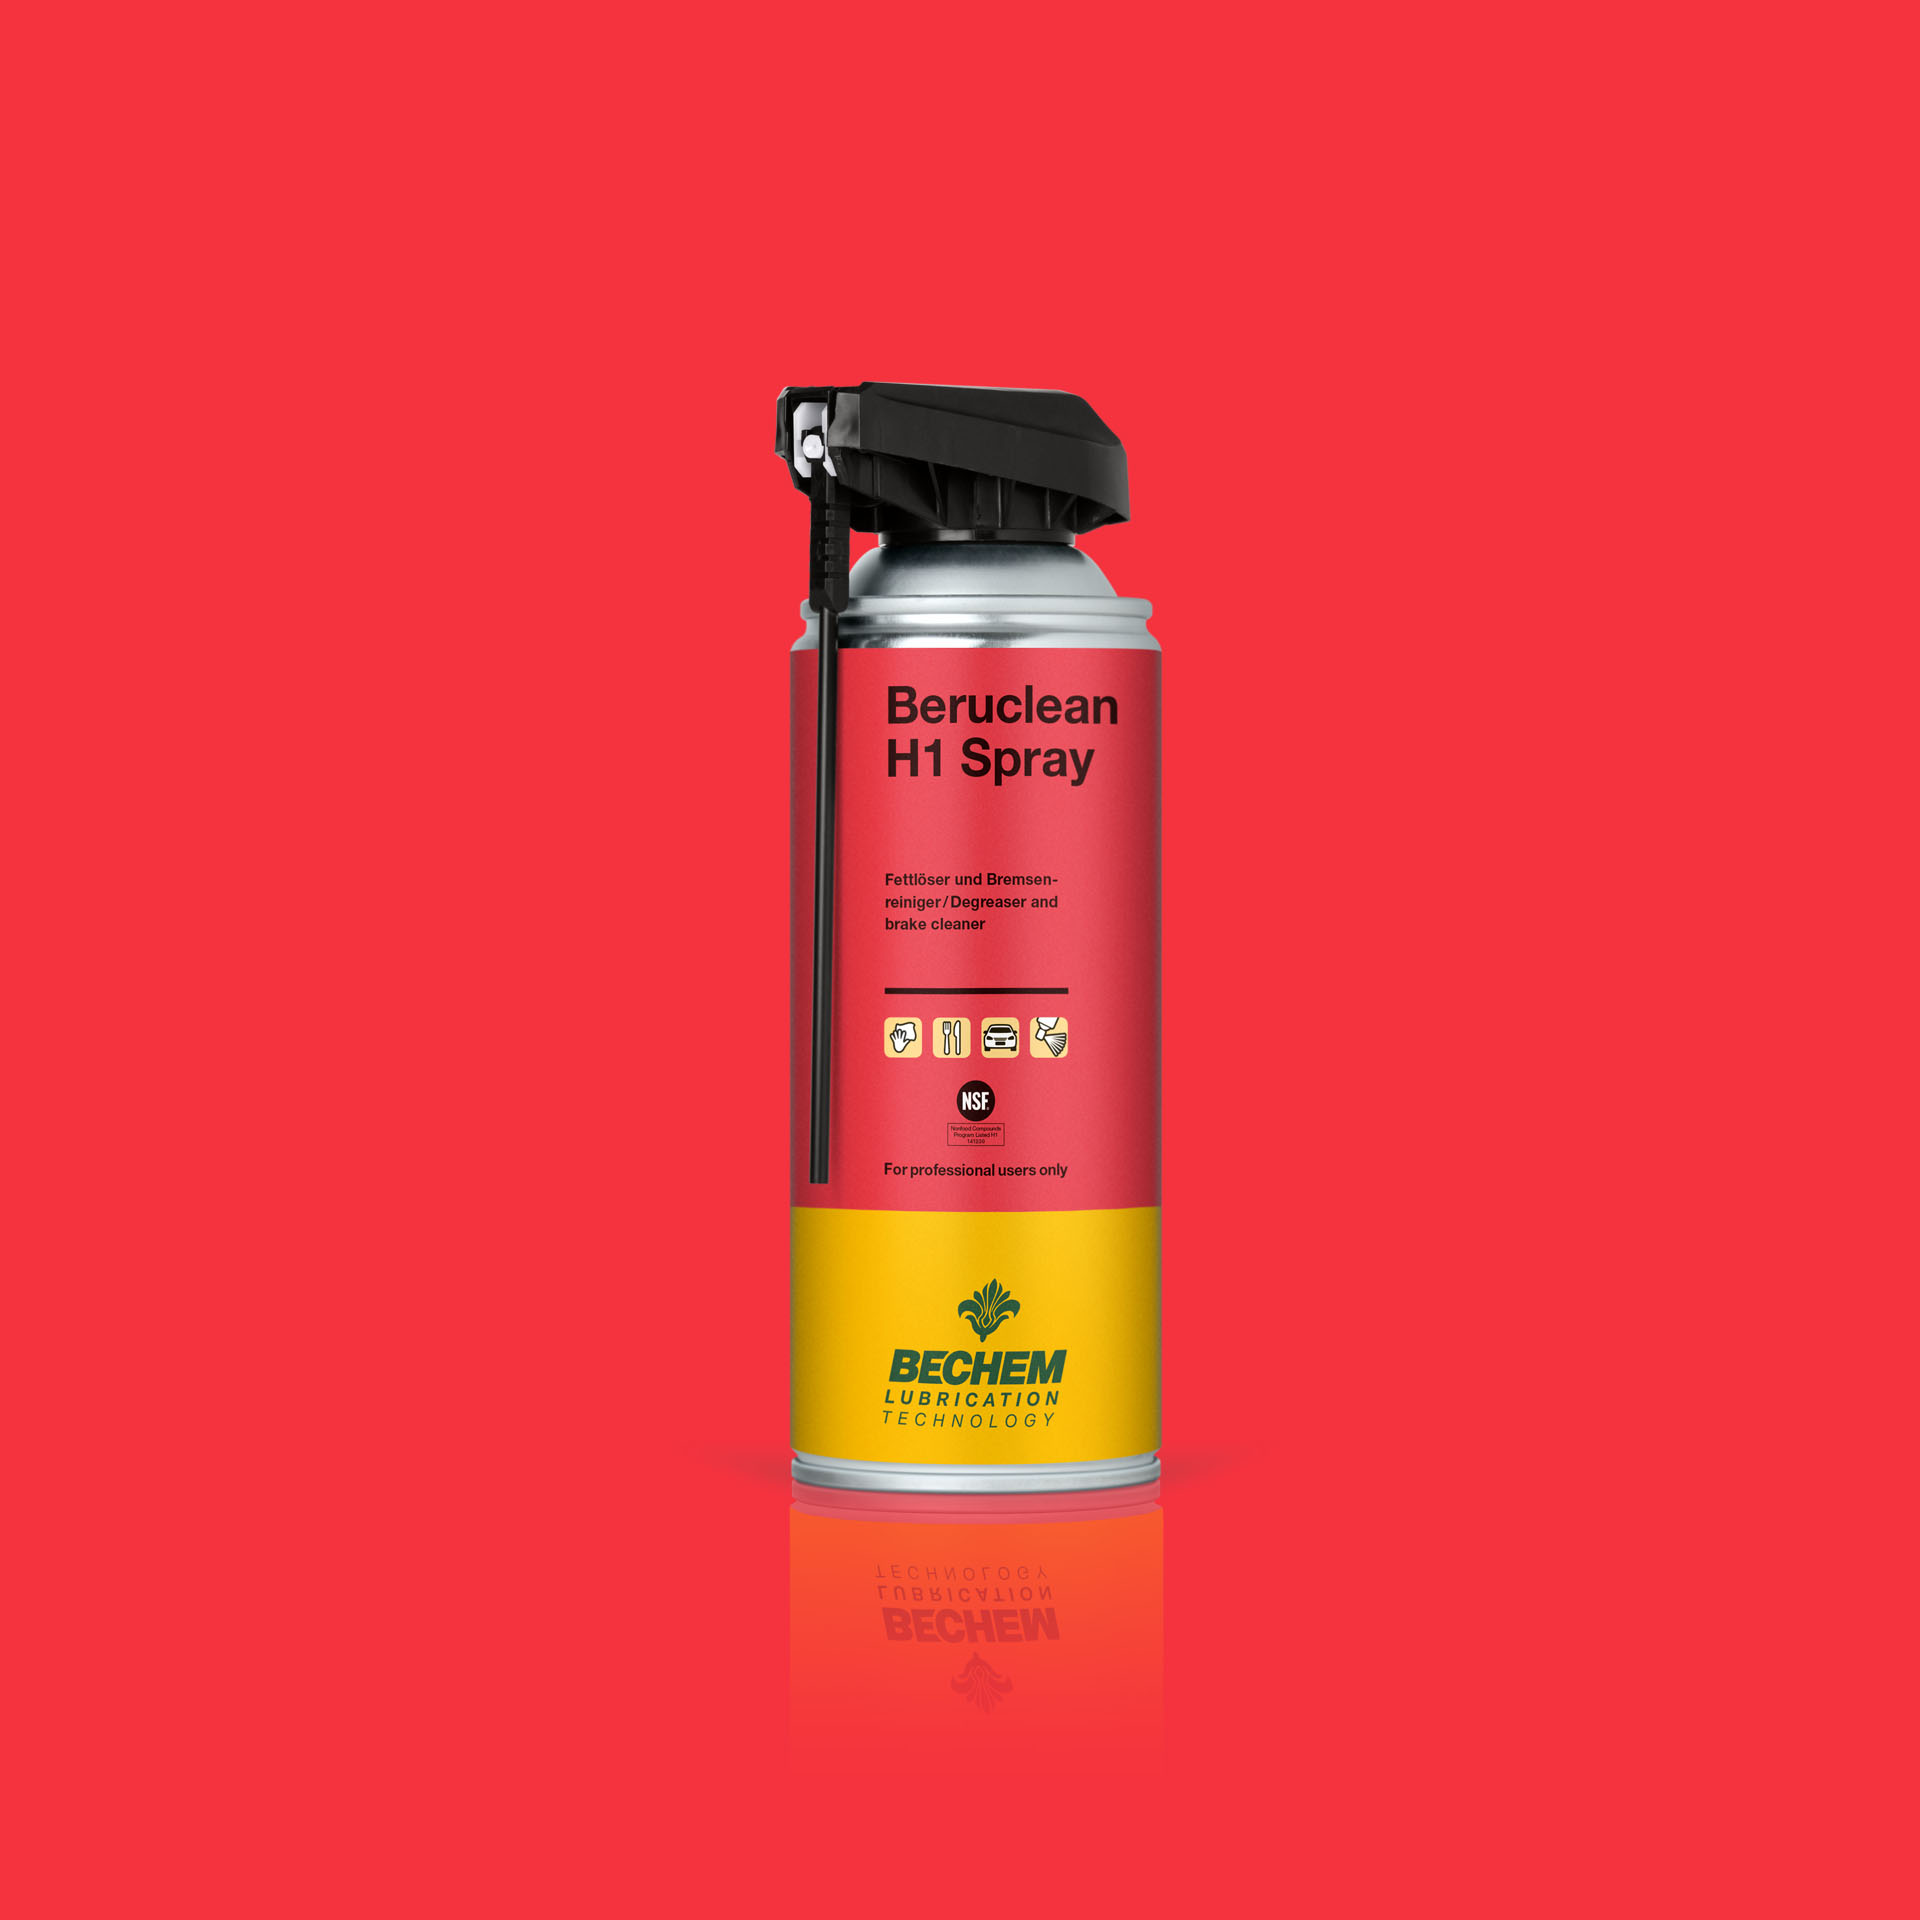 Beruclean H1 Spray - Bote de 400 ml